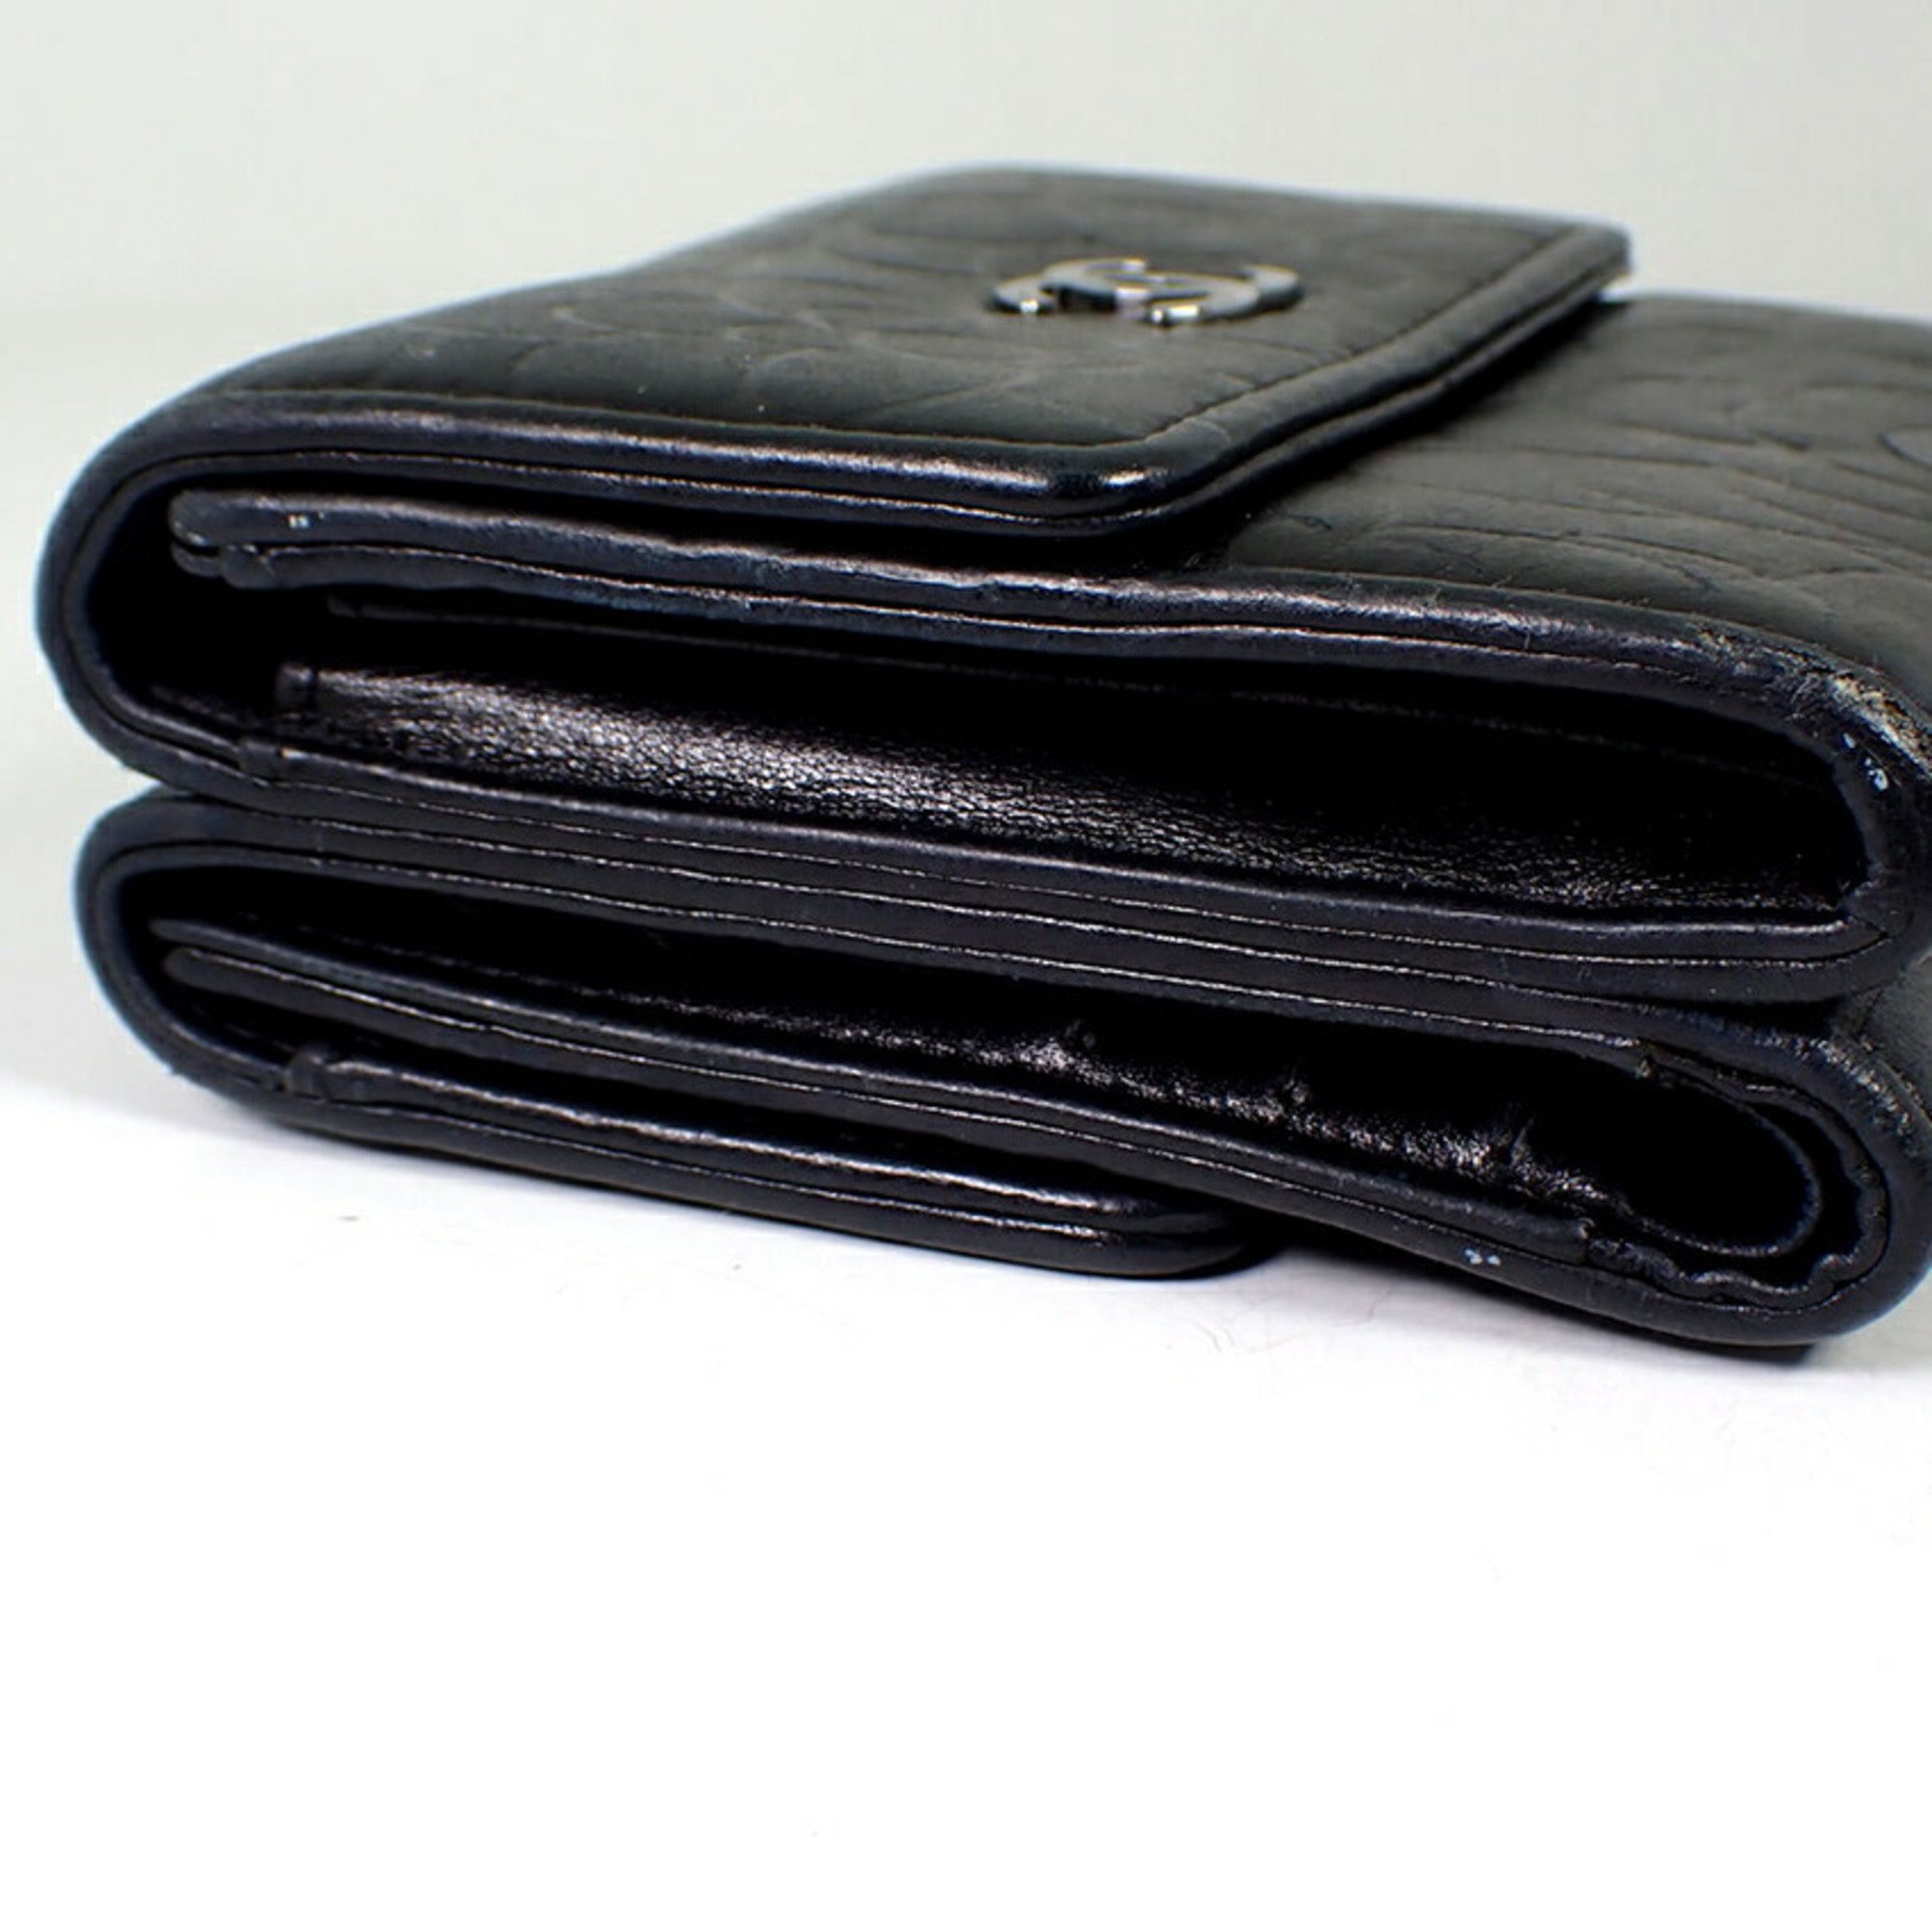 CHANEL Camellia 12096424 Compact Wallet Double Bi-fold